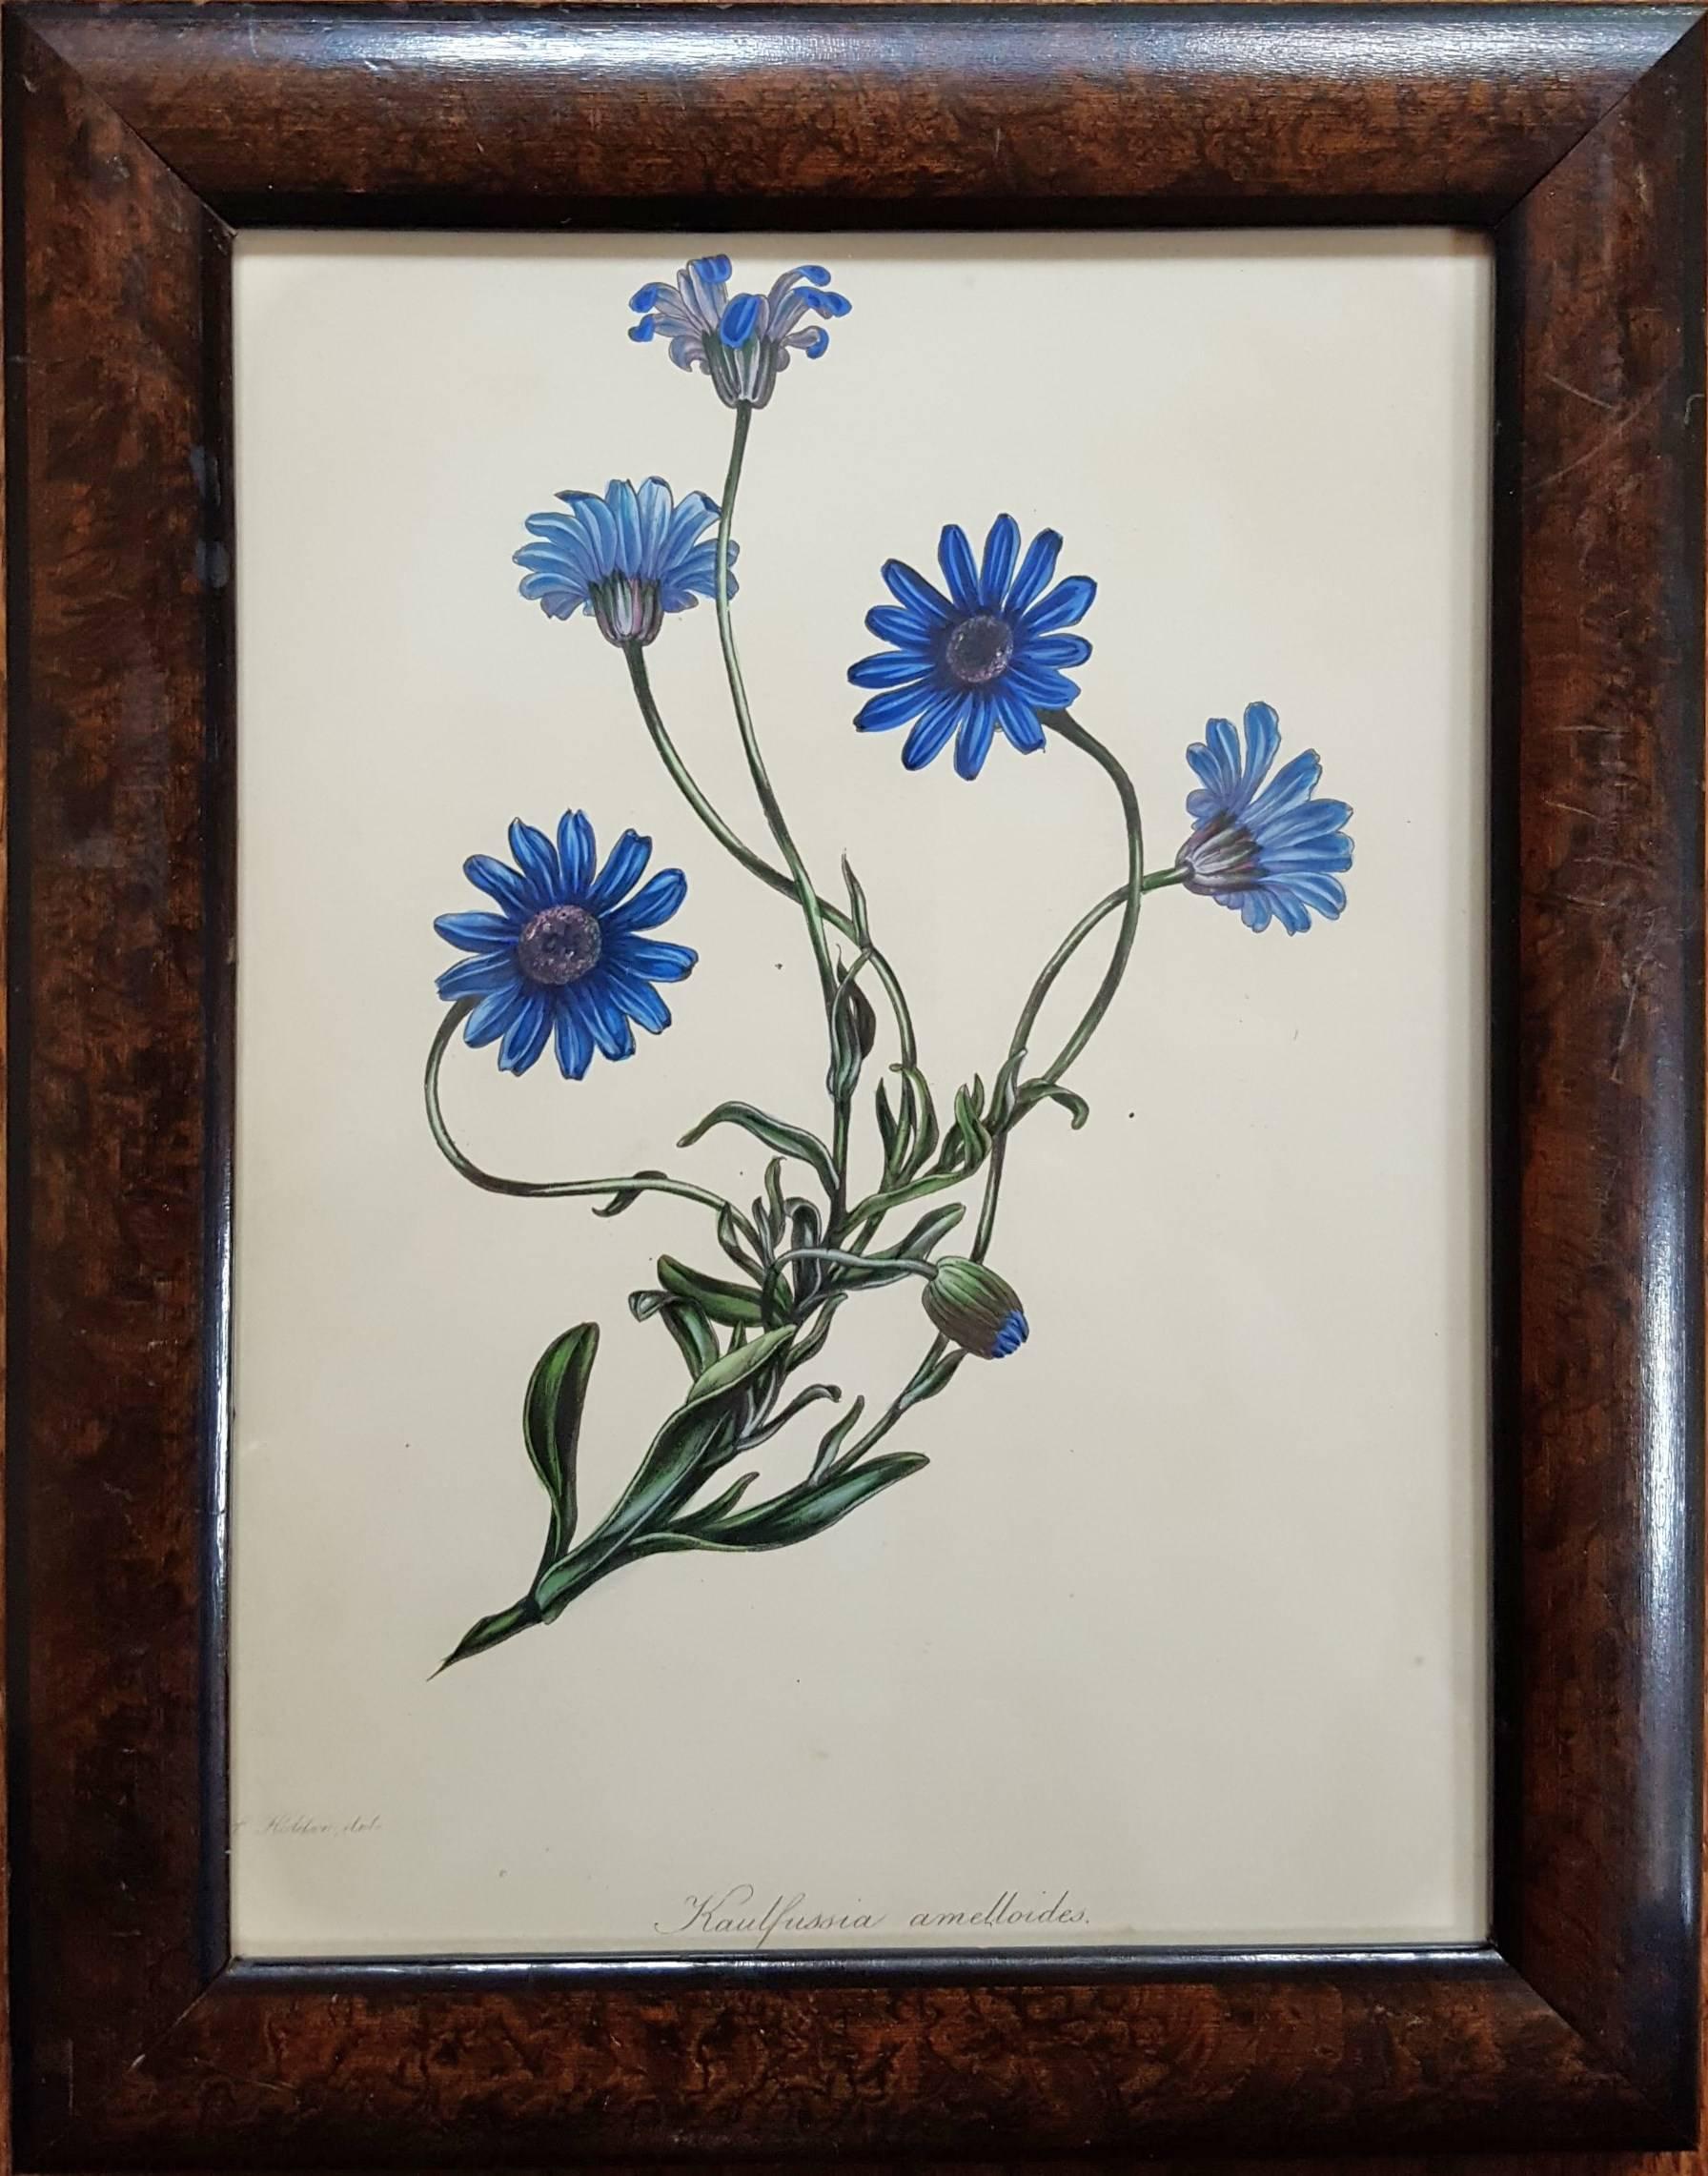 Amelloides (Blue Daisy) - Print by Joseph Paxton